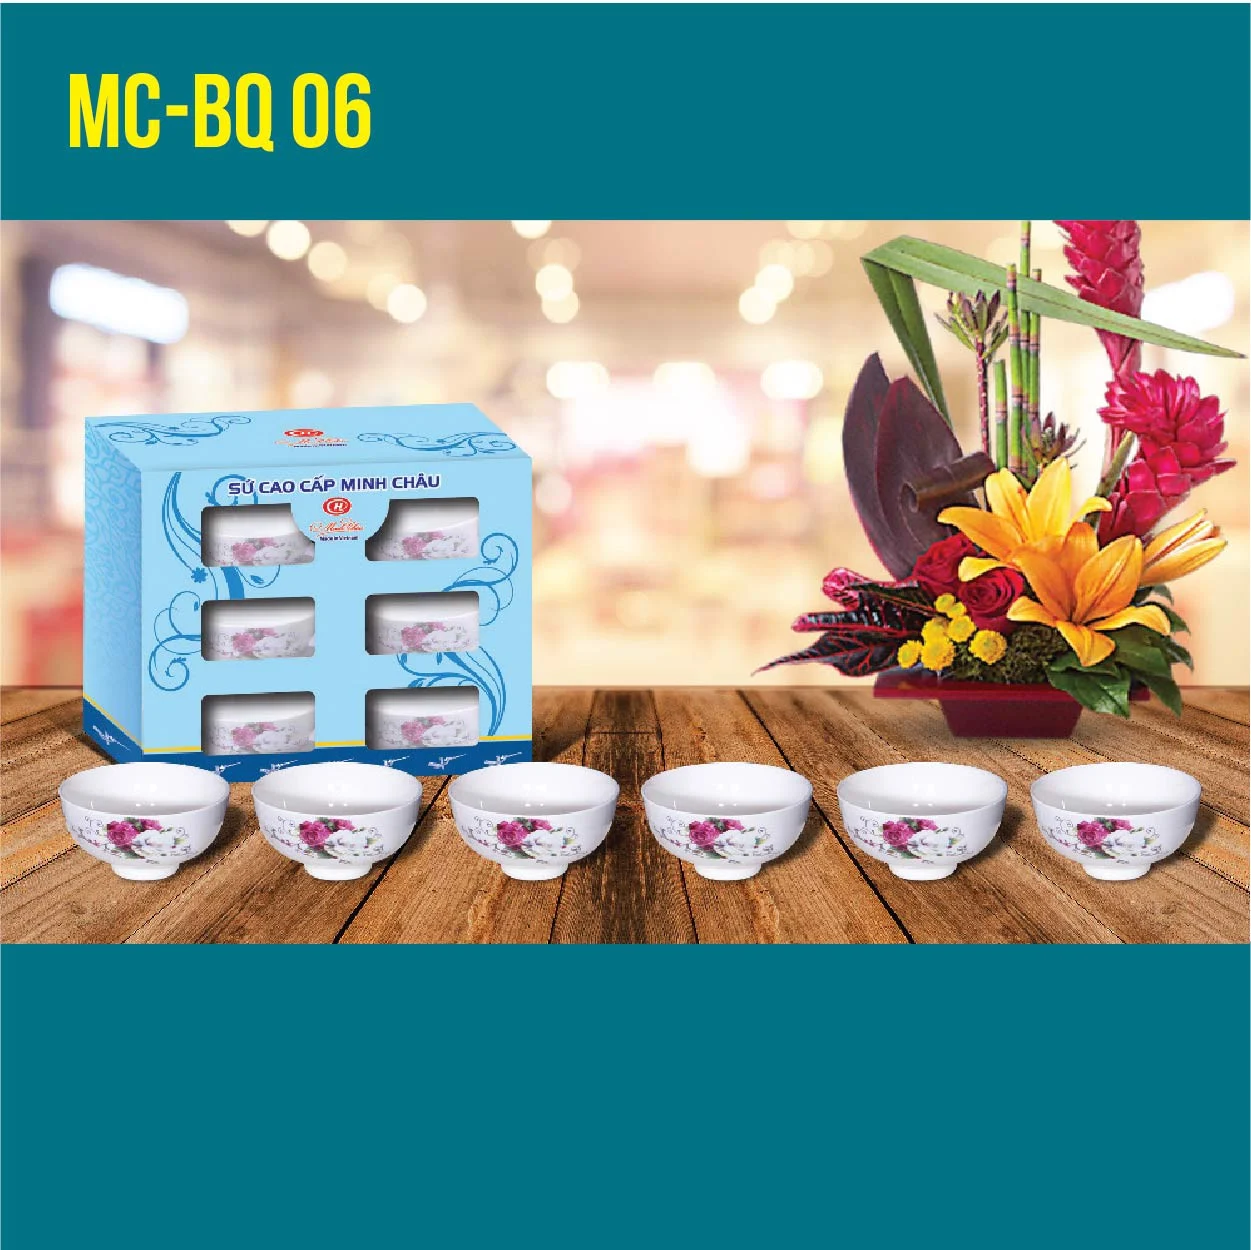 Porcelain rice Bowls Gift Set MC-BQ